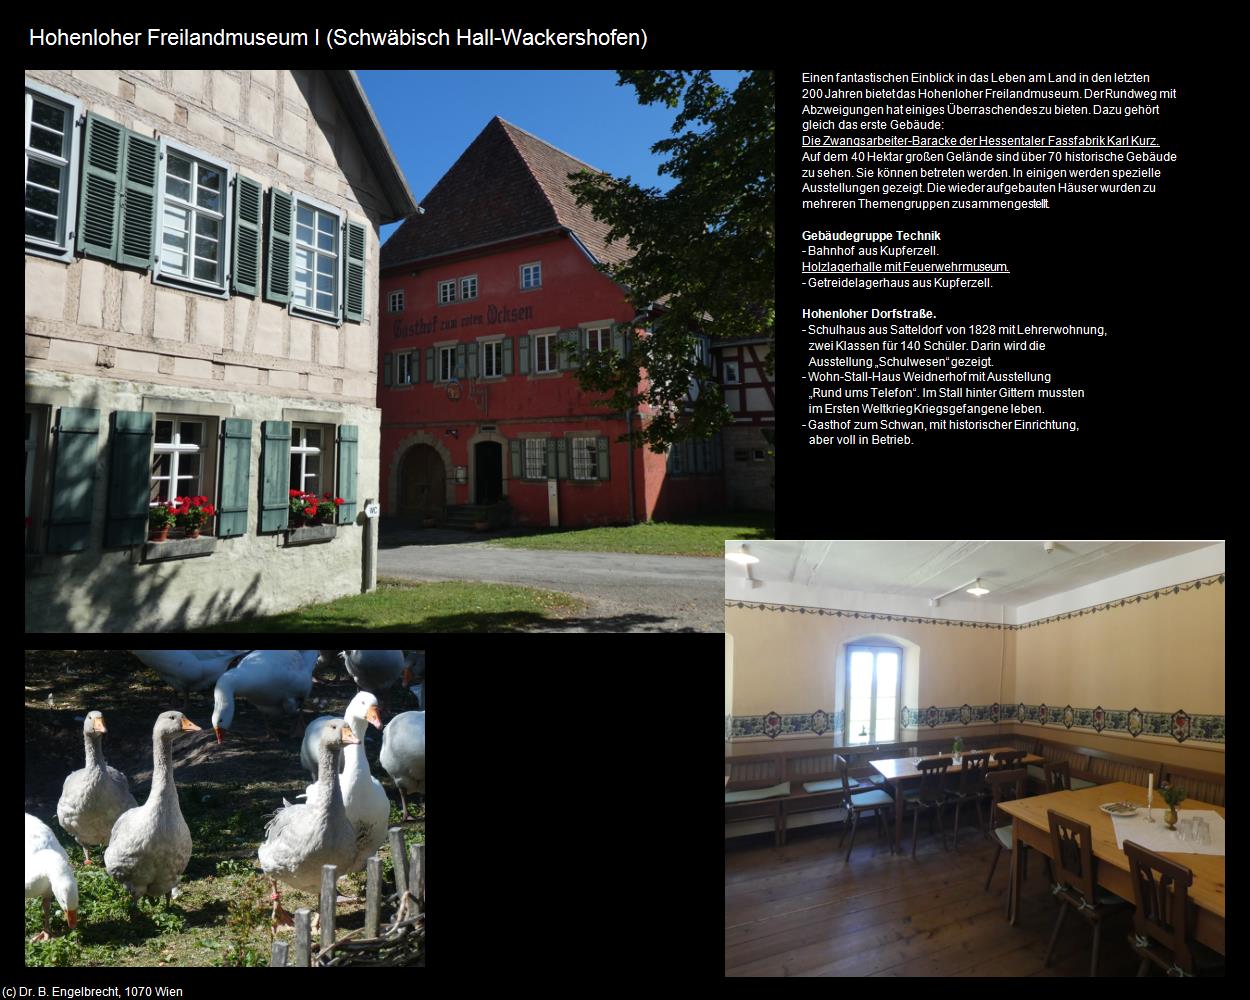 Hohenloher Freilandmuseum I (Wackershofen) (Schwäbisch Hall) in Kulturatlas-BADEN-WÜRTTEMBERG(c)B.Engelbrecht